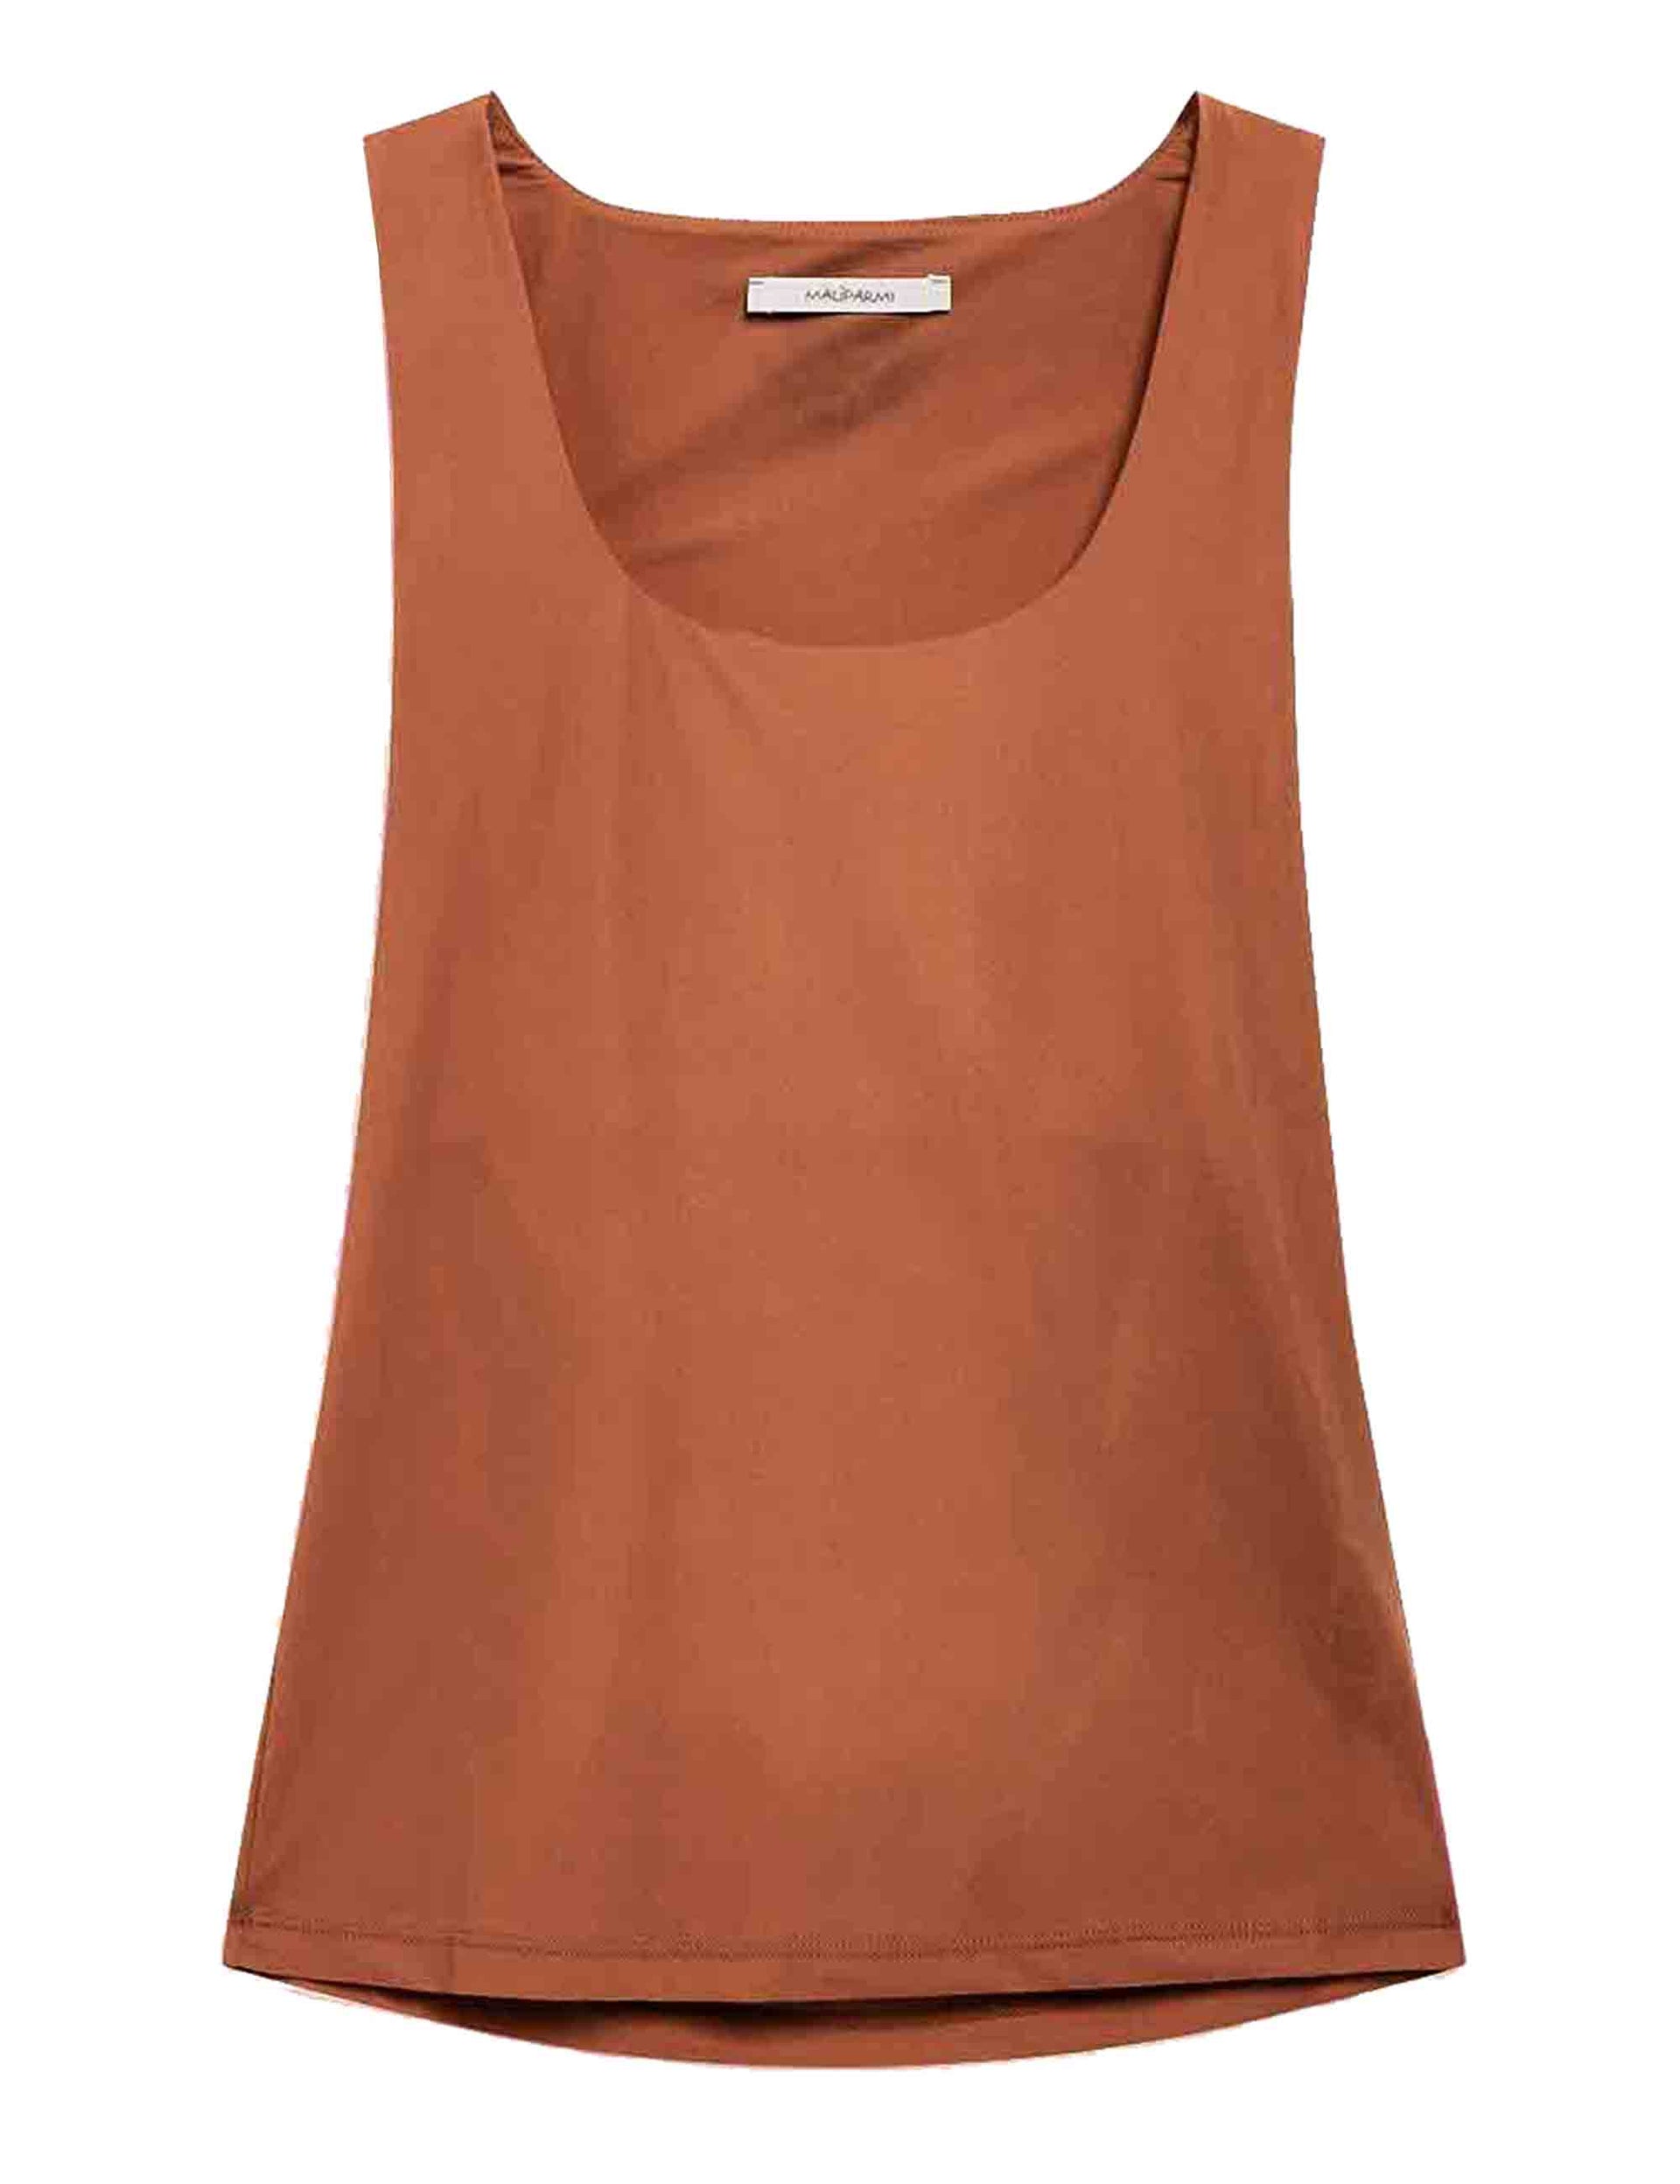 Soft women's top in brown jersey